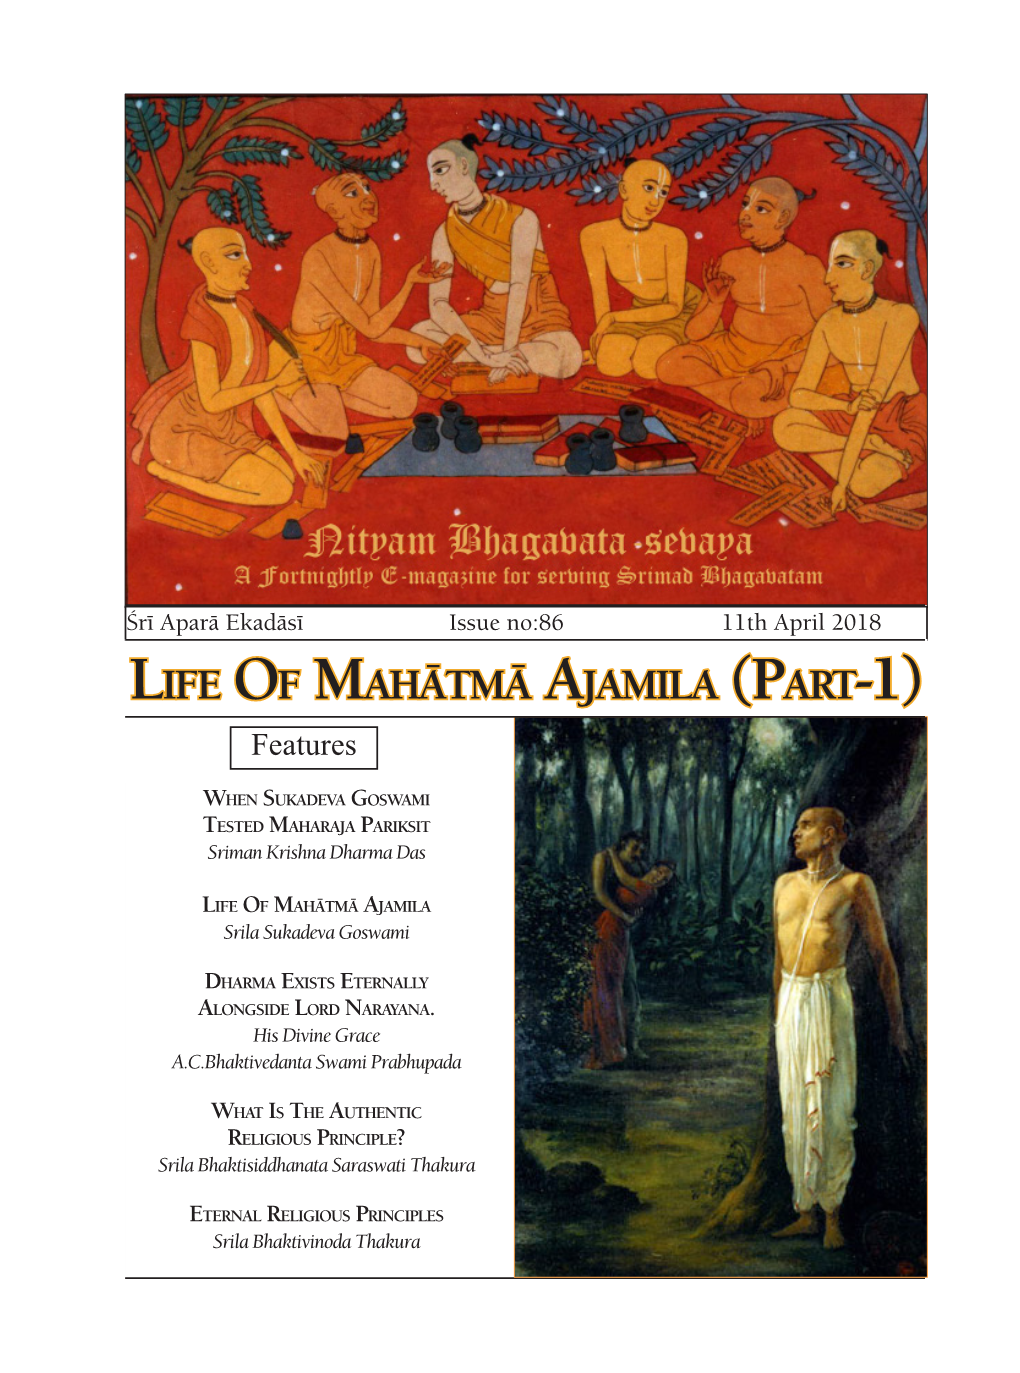 Life of Mahätmä Ajamila (Part-1) Features